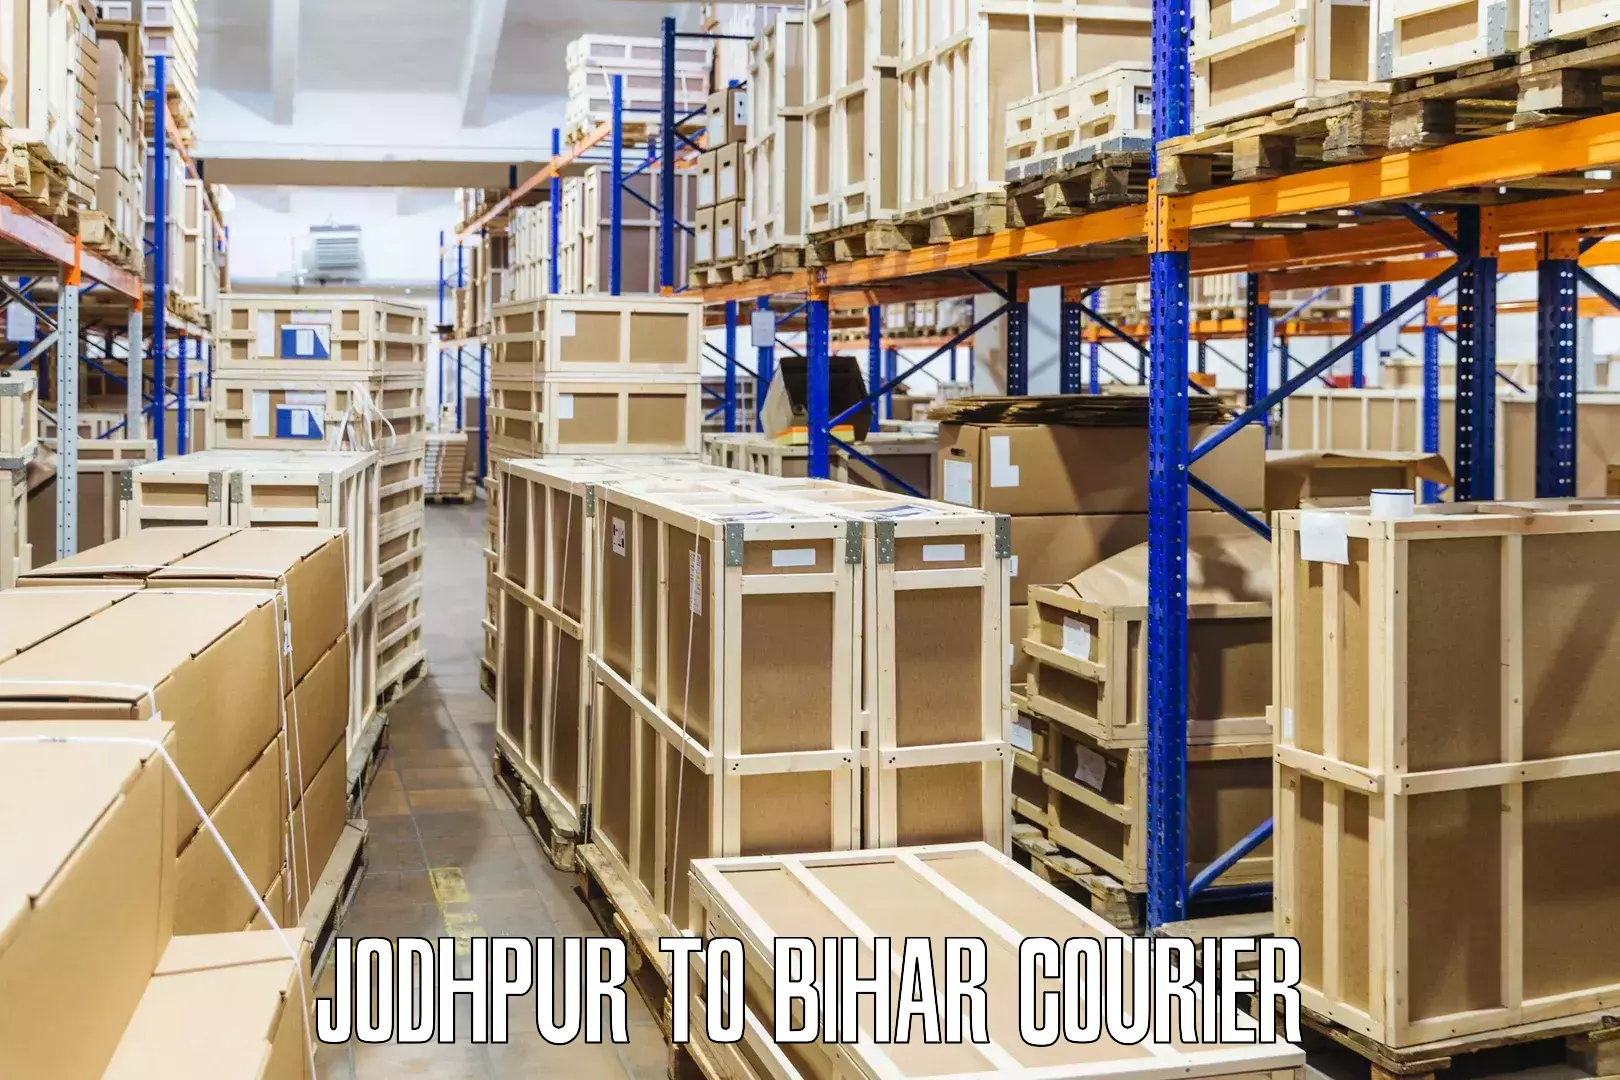 Express logistics providers Jodhpur to Dhaka